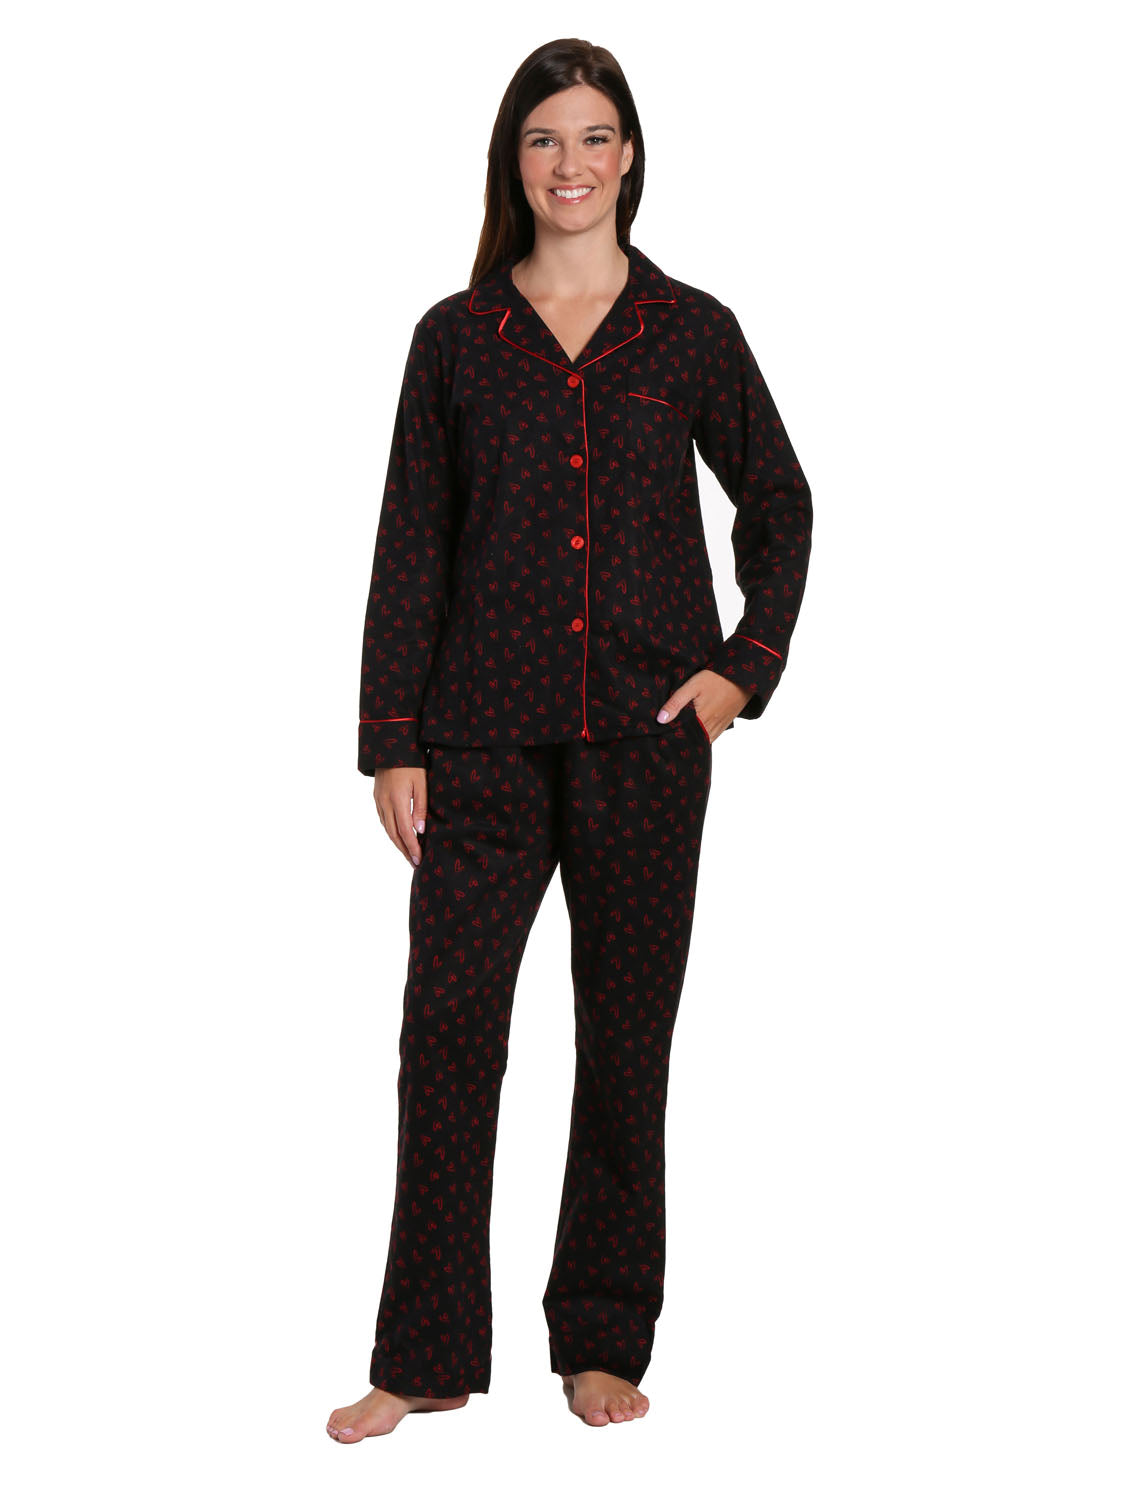 Noble Mount Women's Cotton Flannel Pajama Set - Constellations